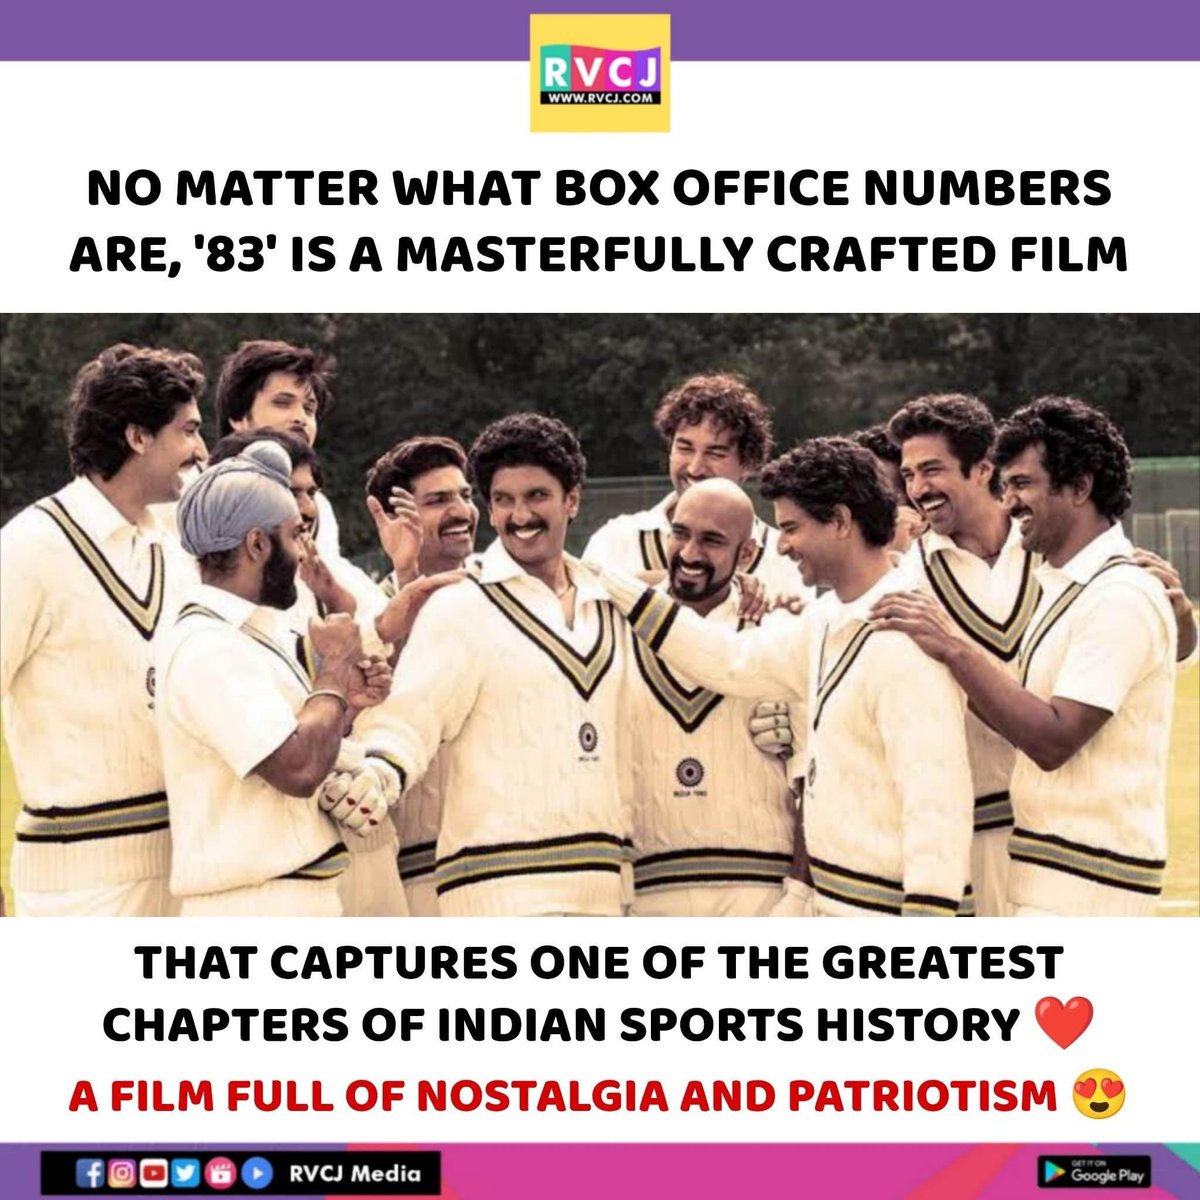 83 🏏
#83thefilm #ranveersingh #kabirkhan #bollywood #cricket #rvcjmovies